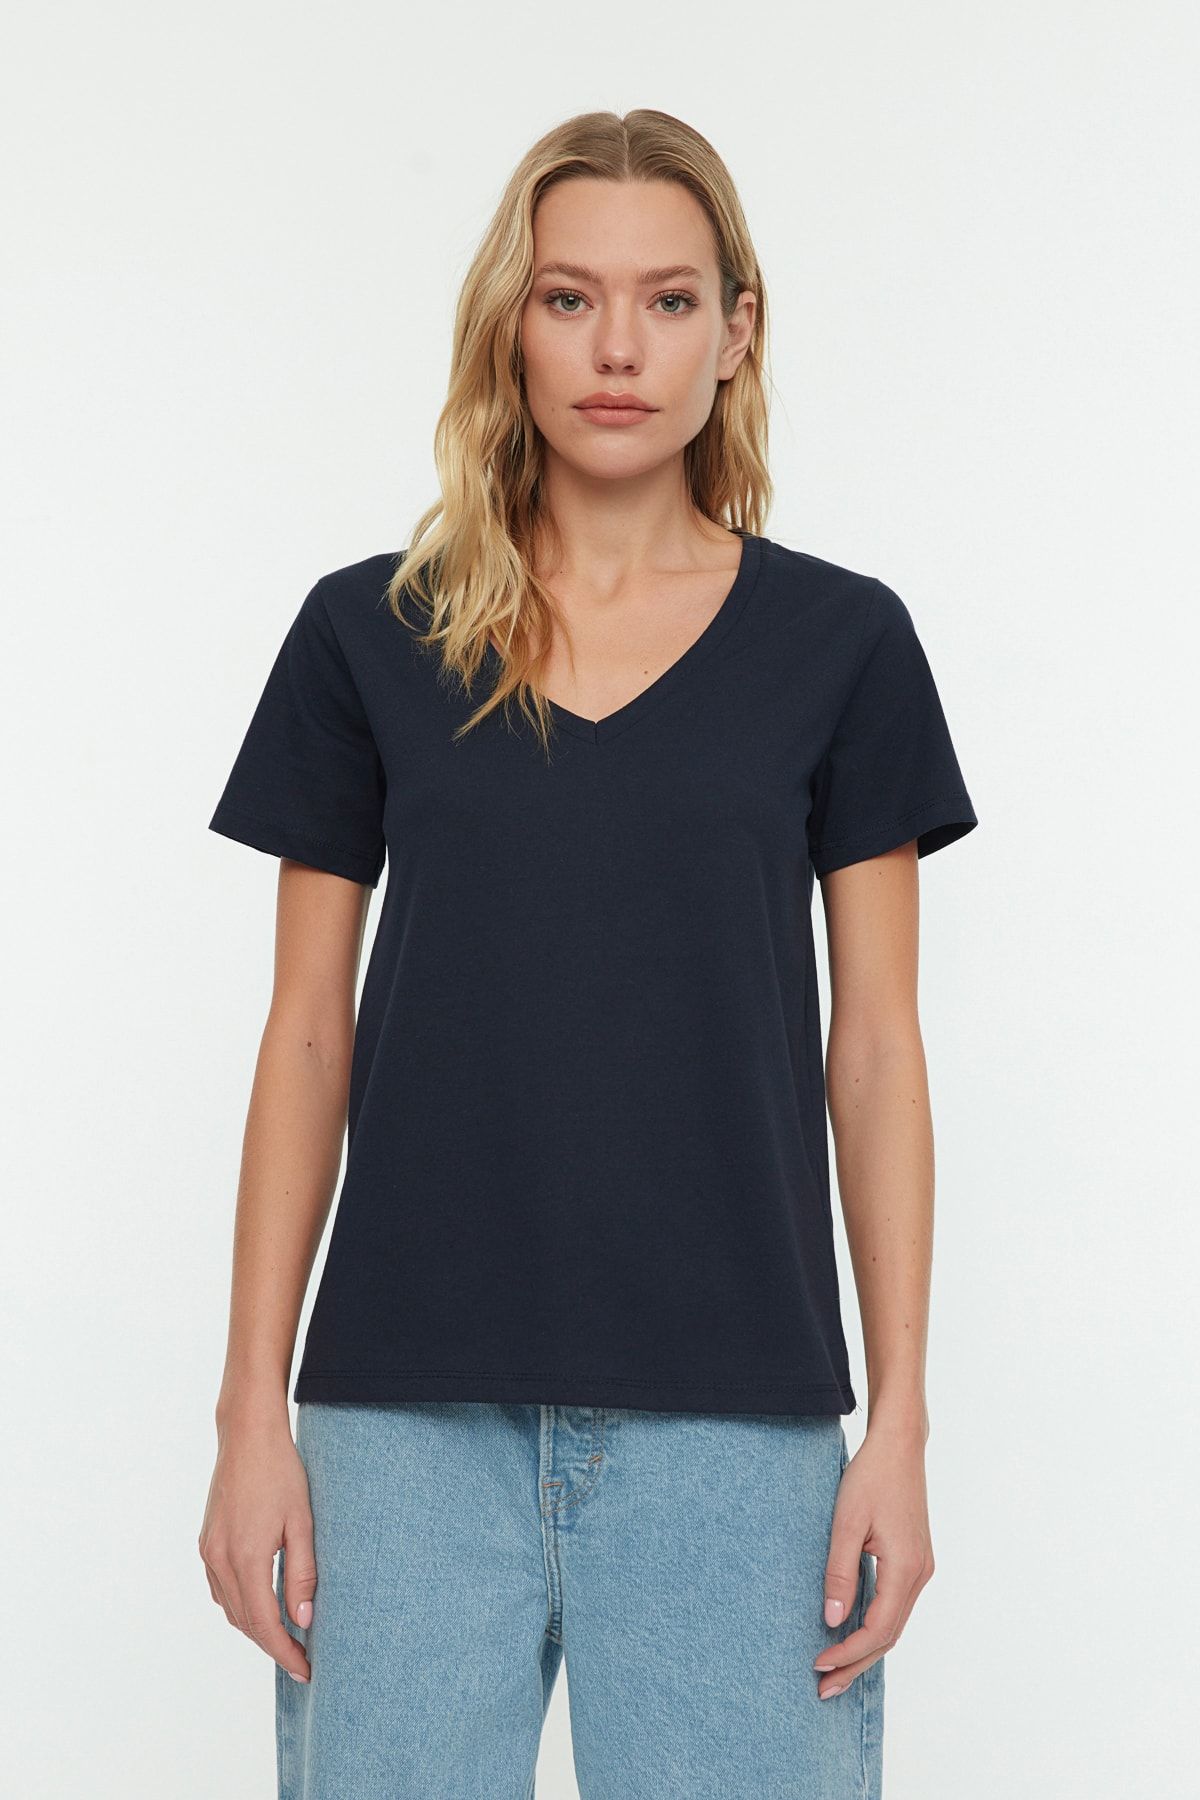 TRENDYOLMİLLA Lacivert V Yaka Basic Örme T-Shirt TWOSS20TS0129